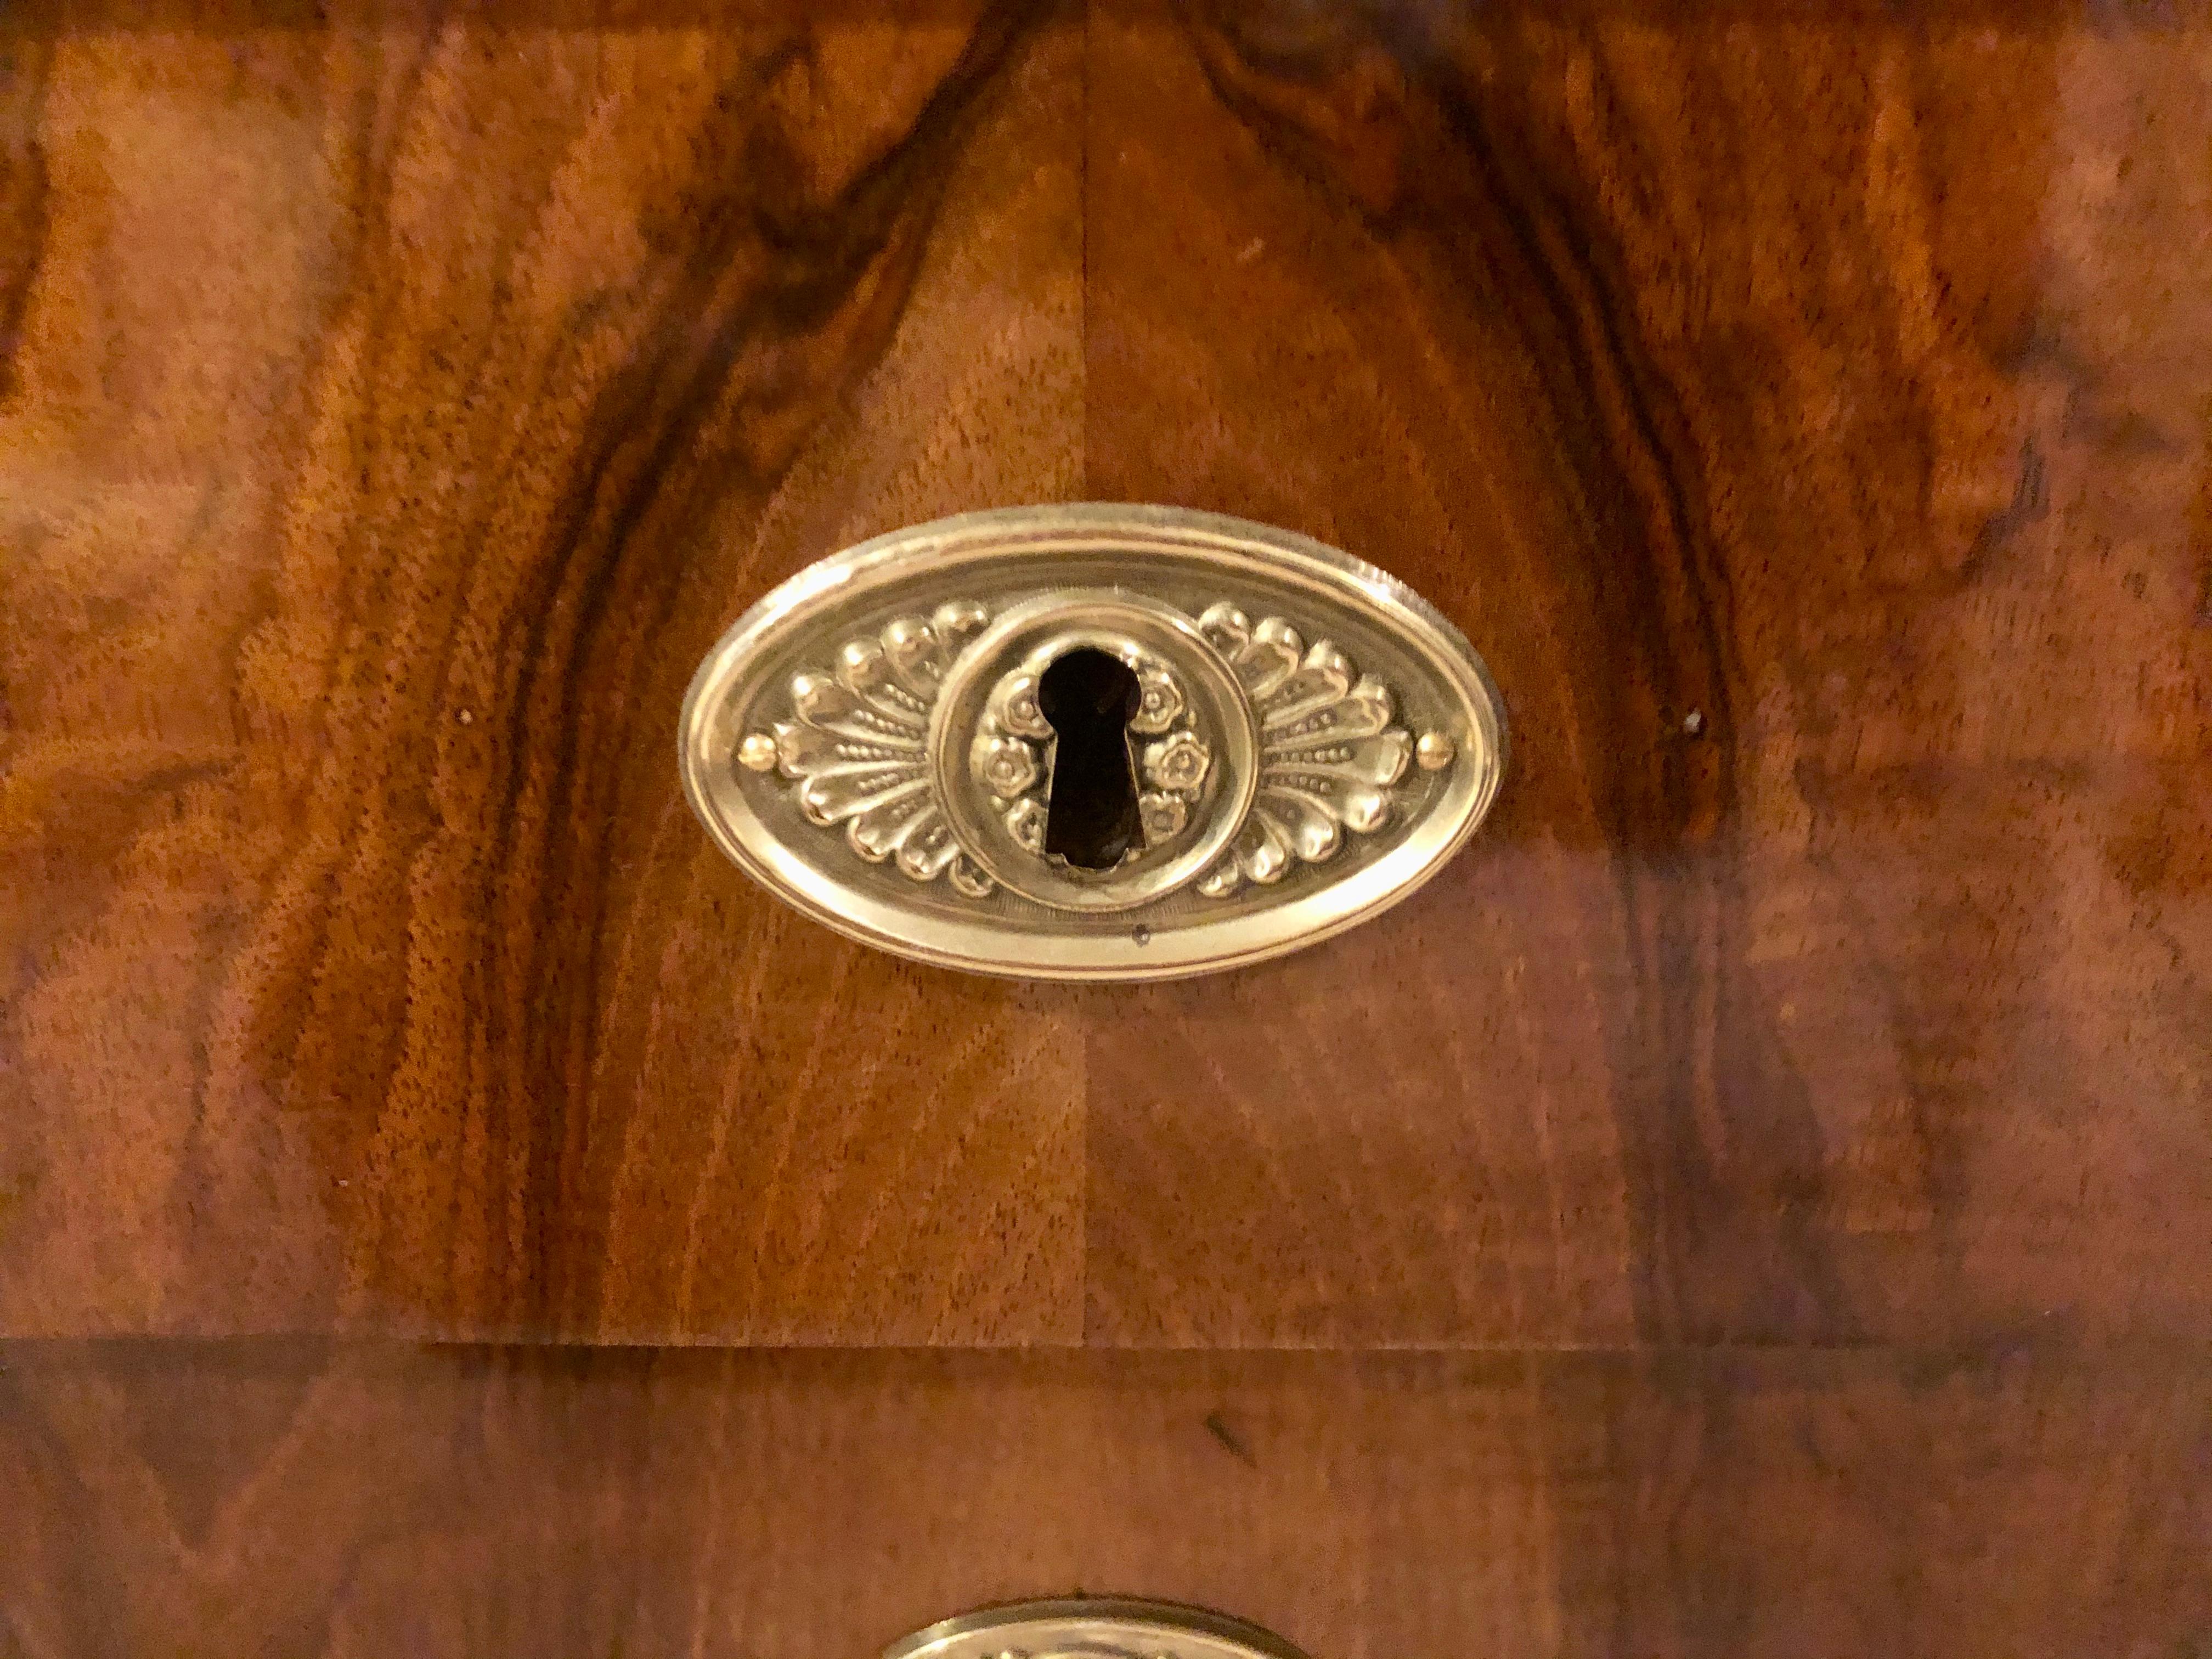 biedermeier chest of drawers